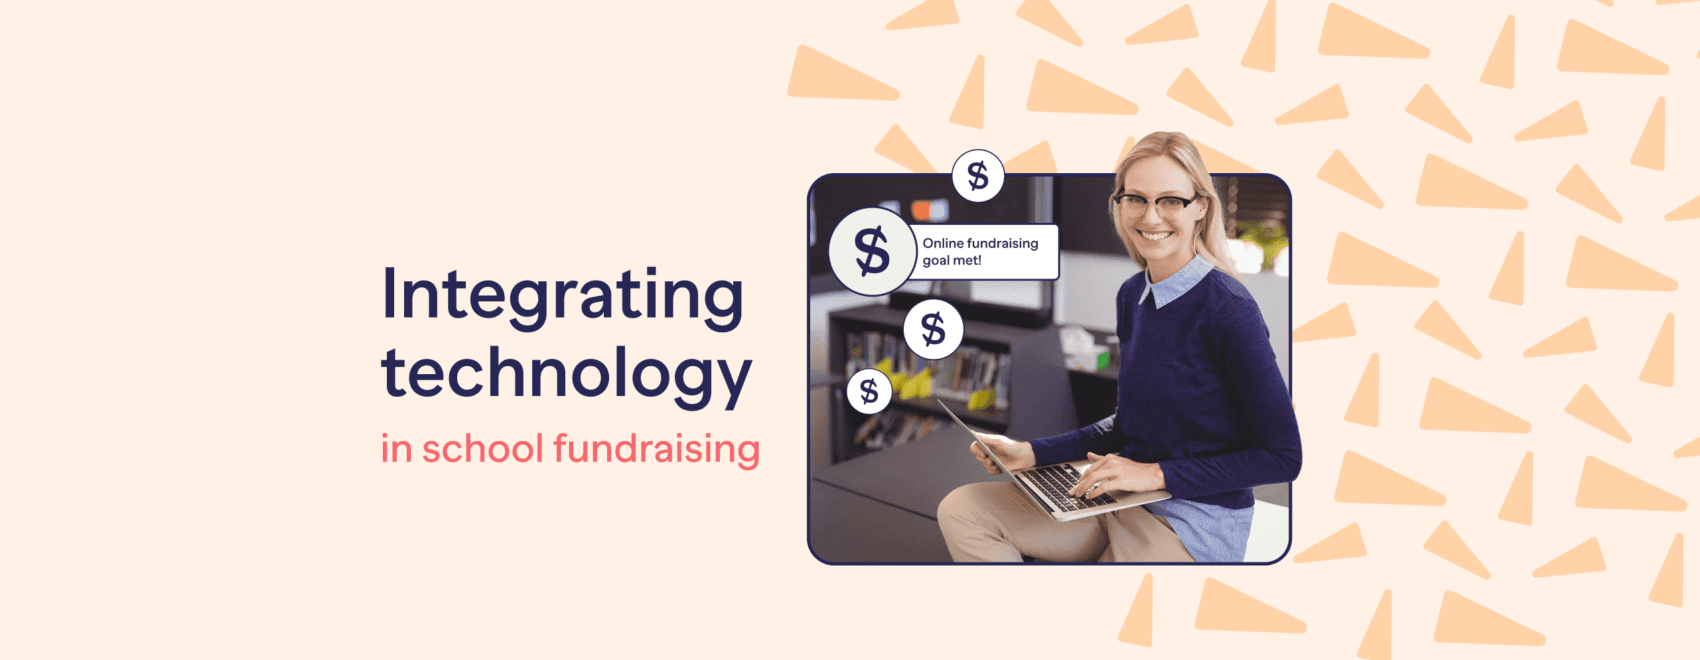 Integrating technology in school fundraising